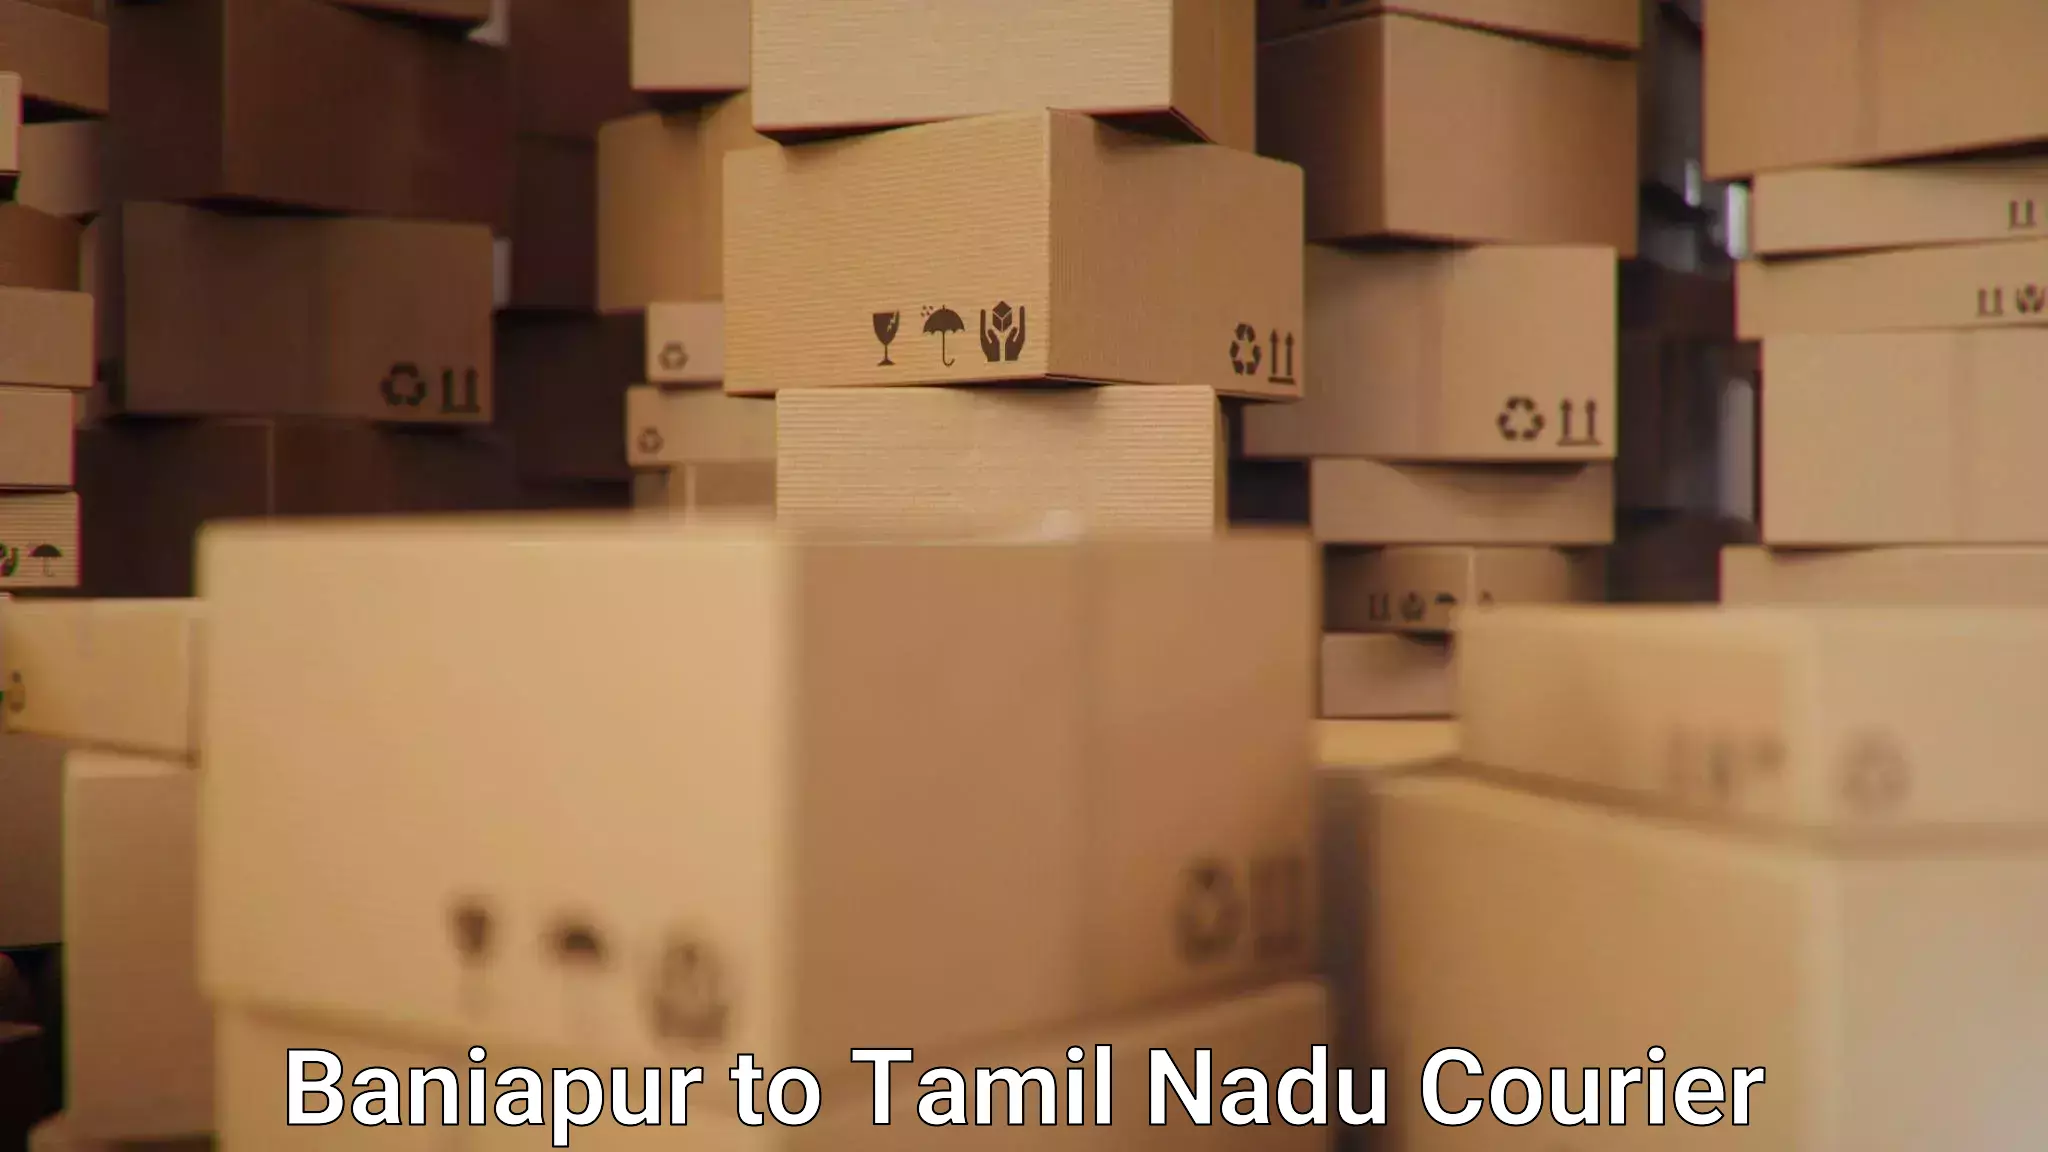 Custom courier packaging Baniapur to Melur